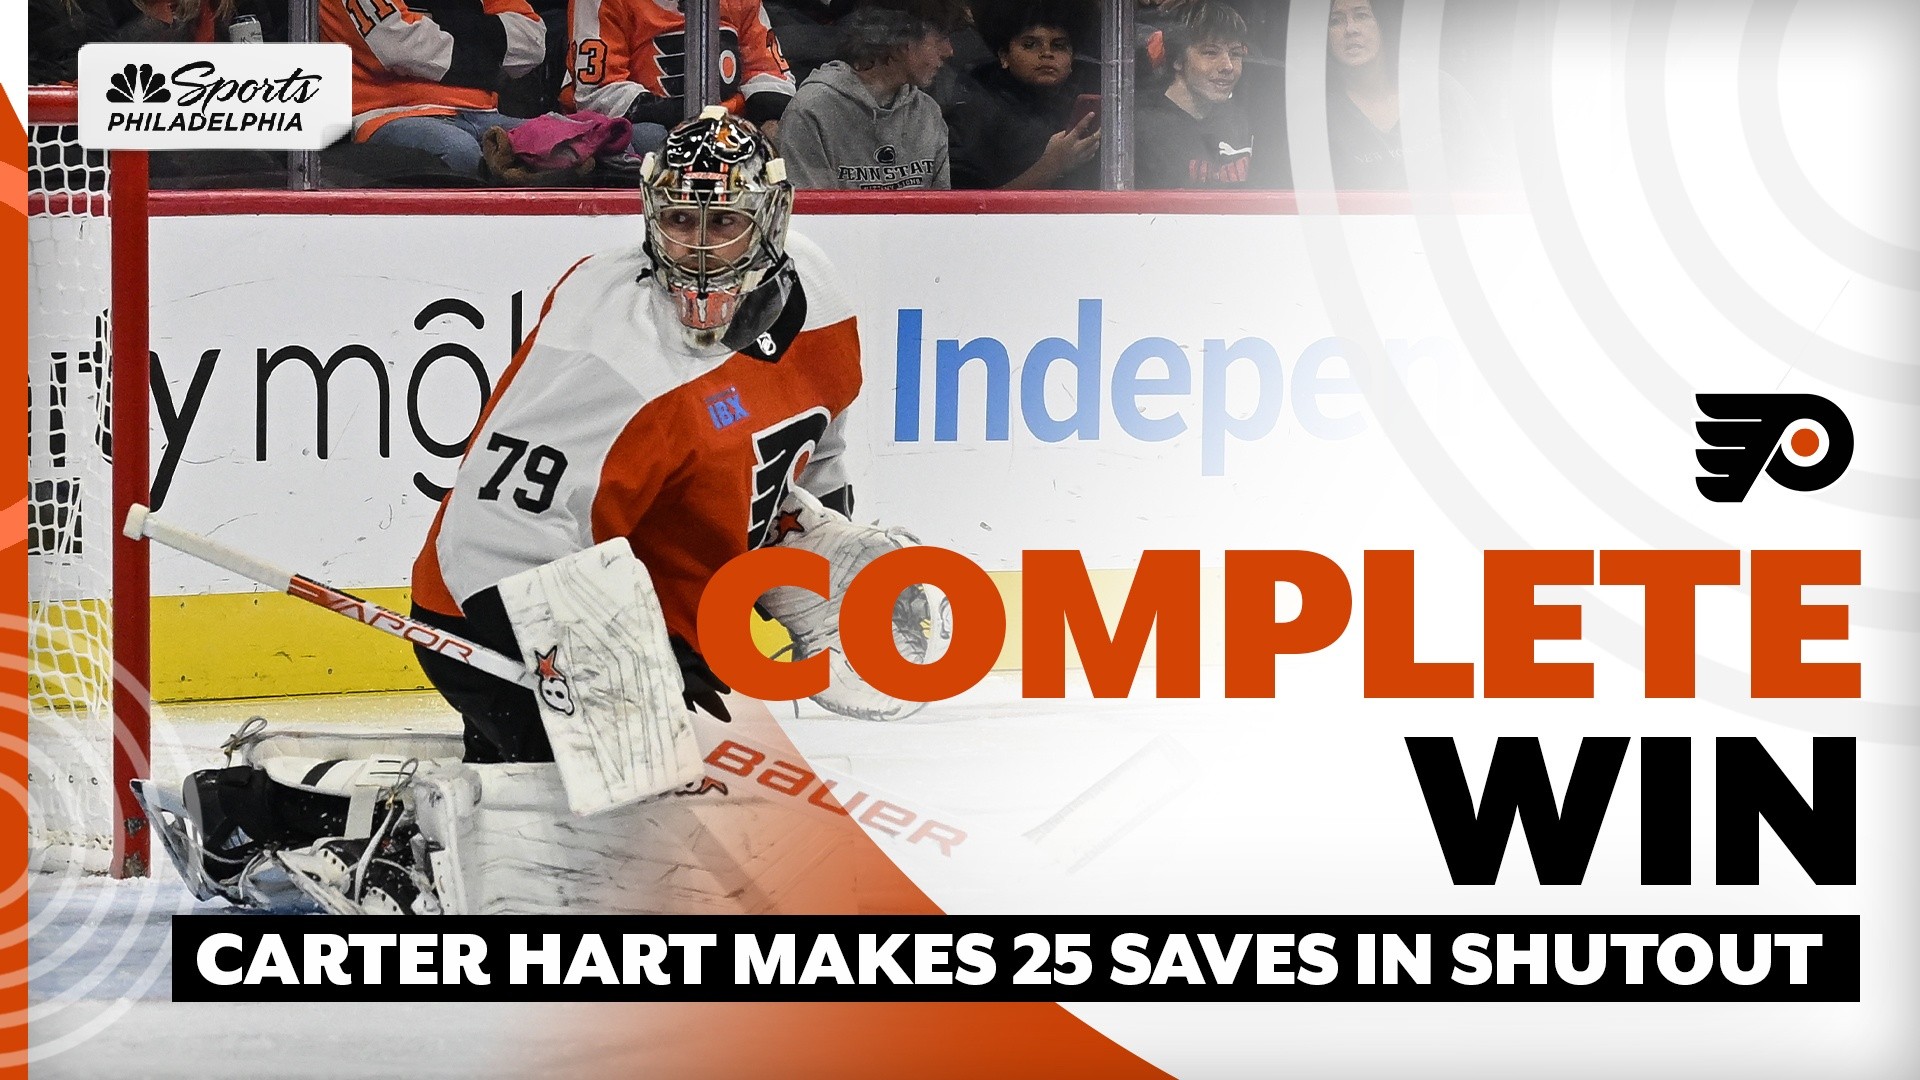 Carter Hart ill, Flyers Make Moves